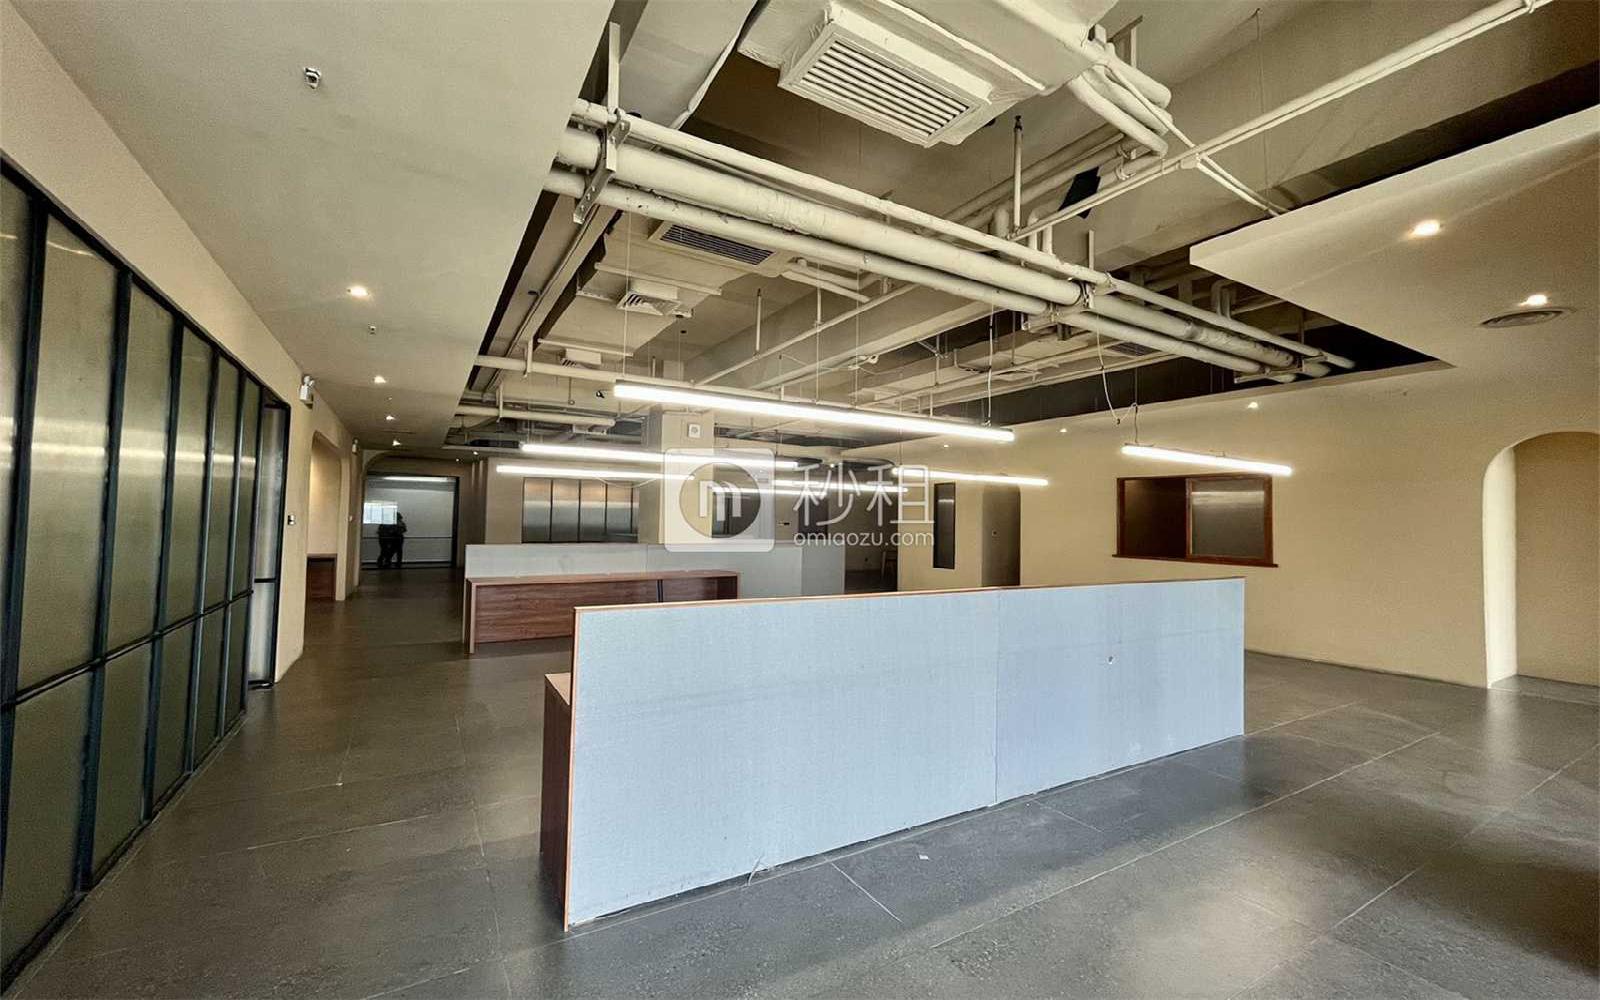 T-PARK深港影视创意园写字楼出租740平米精装办公室108元/m².月